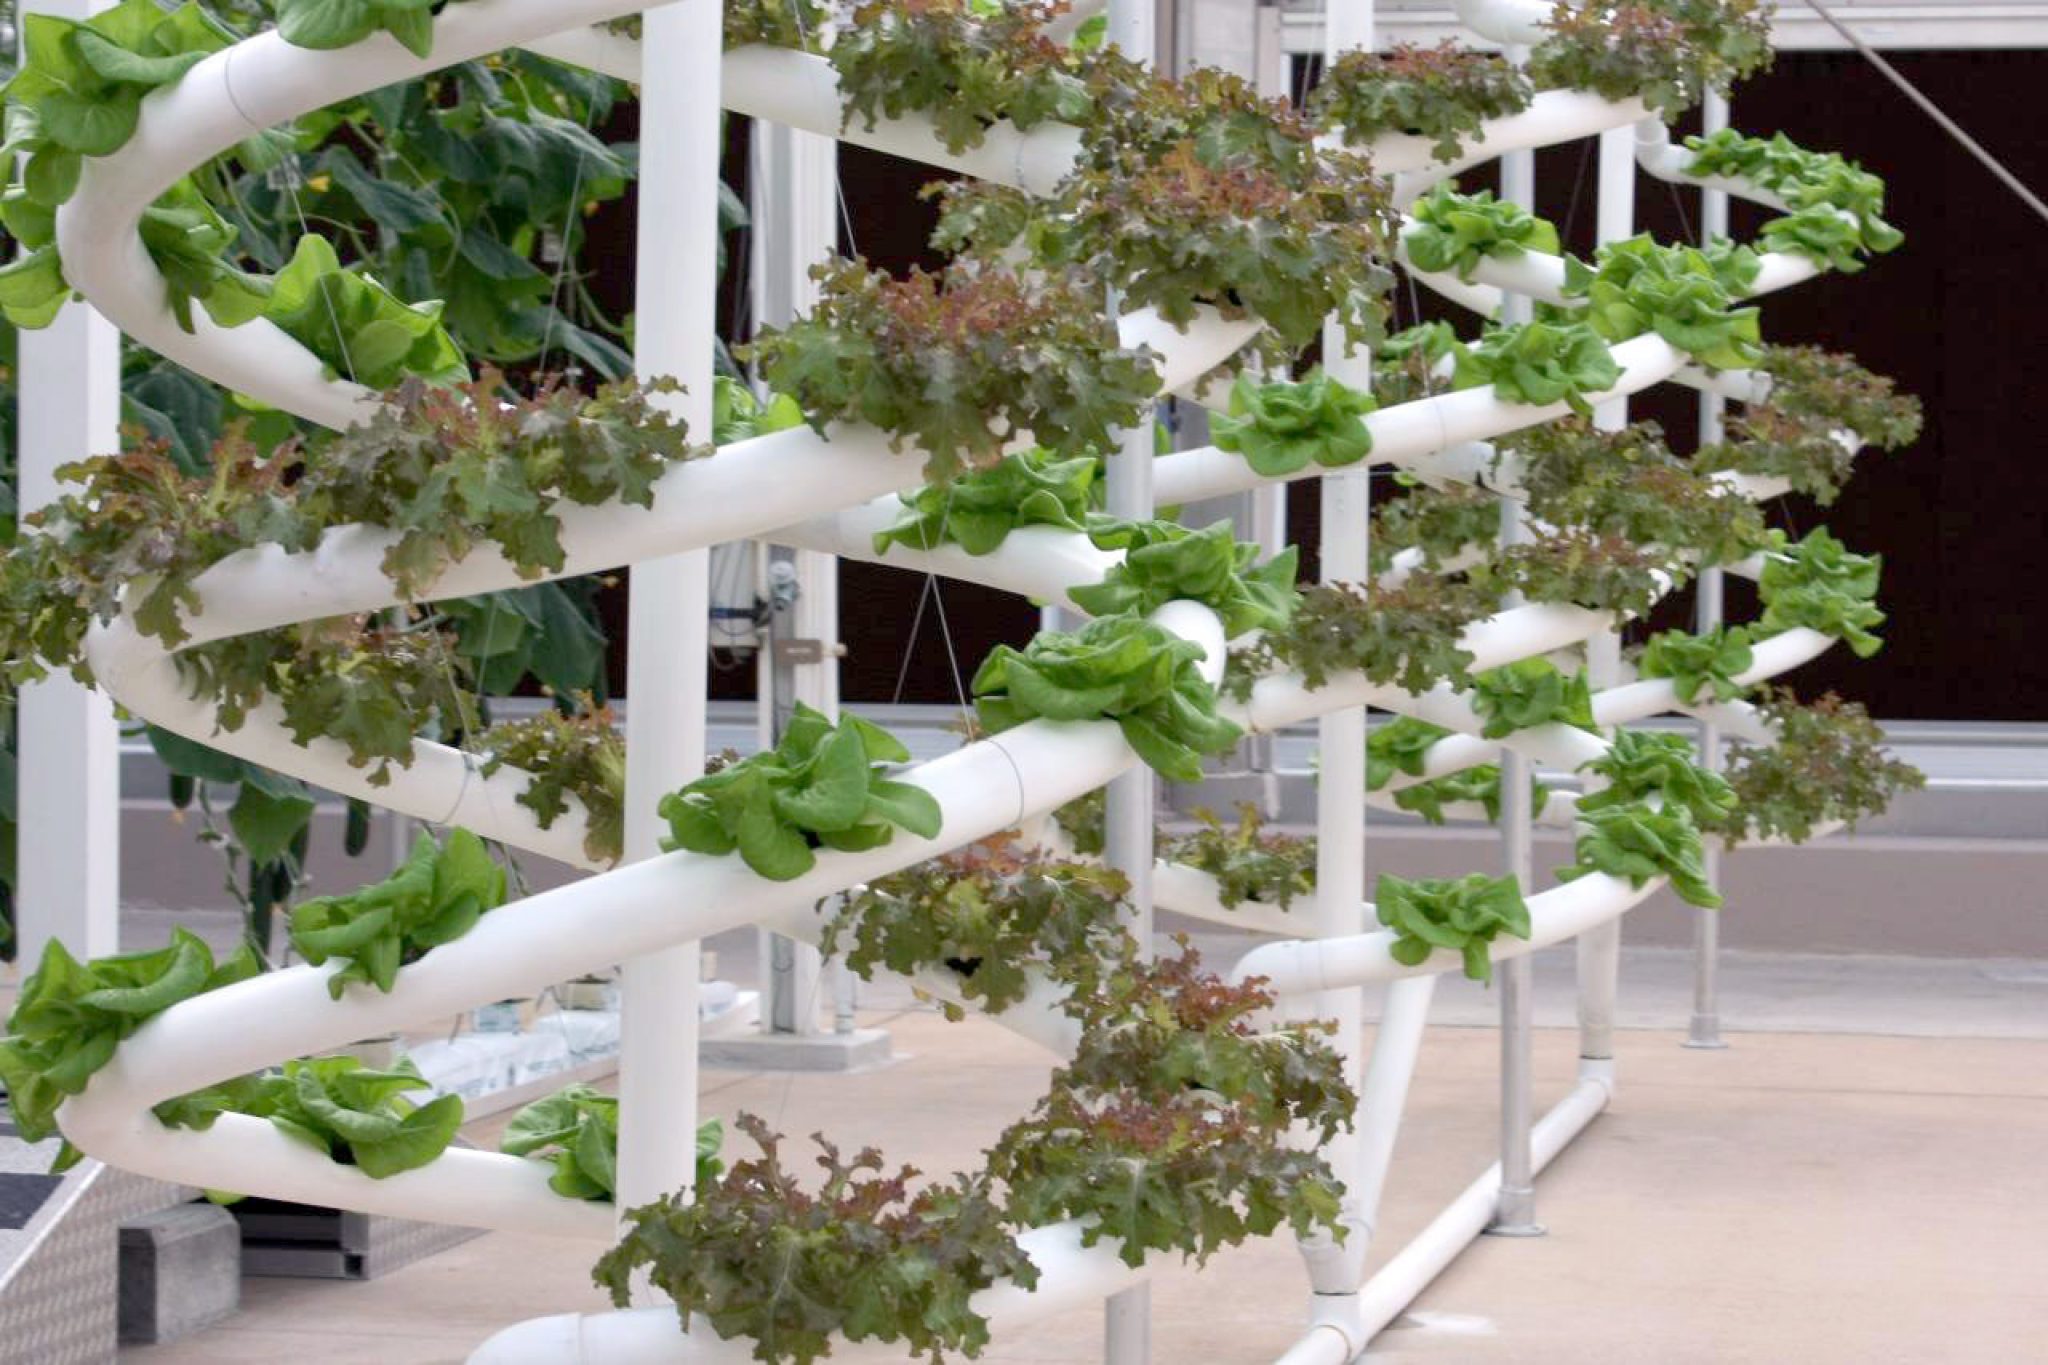 Hydroponic systems gardening hydroponics growing indoor hidroponik rexis buyers market